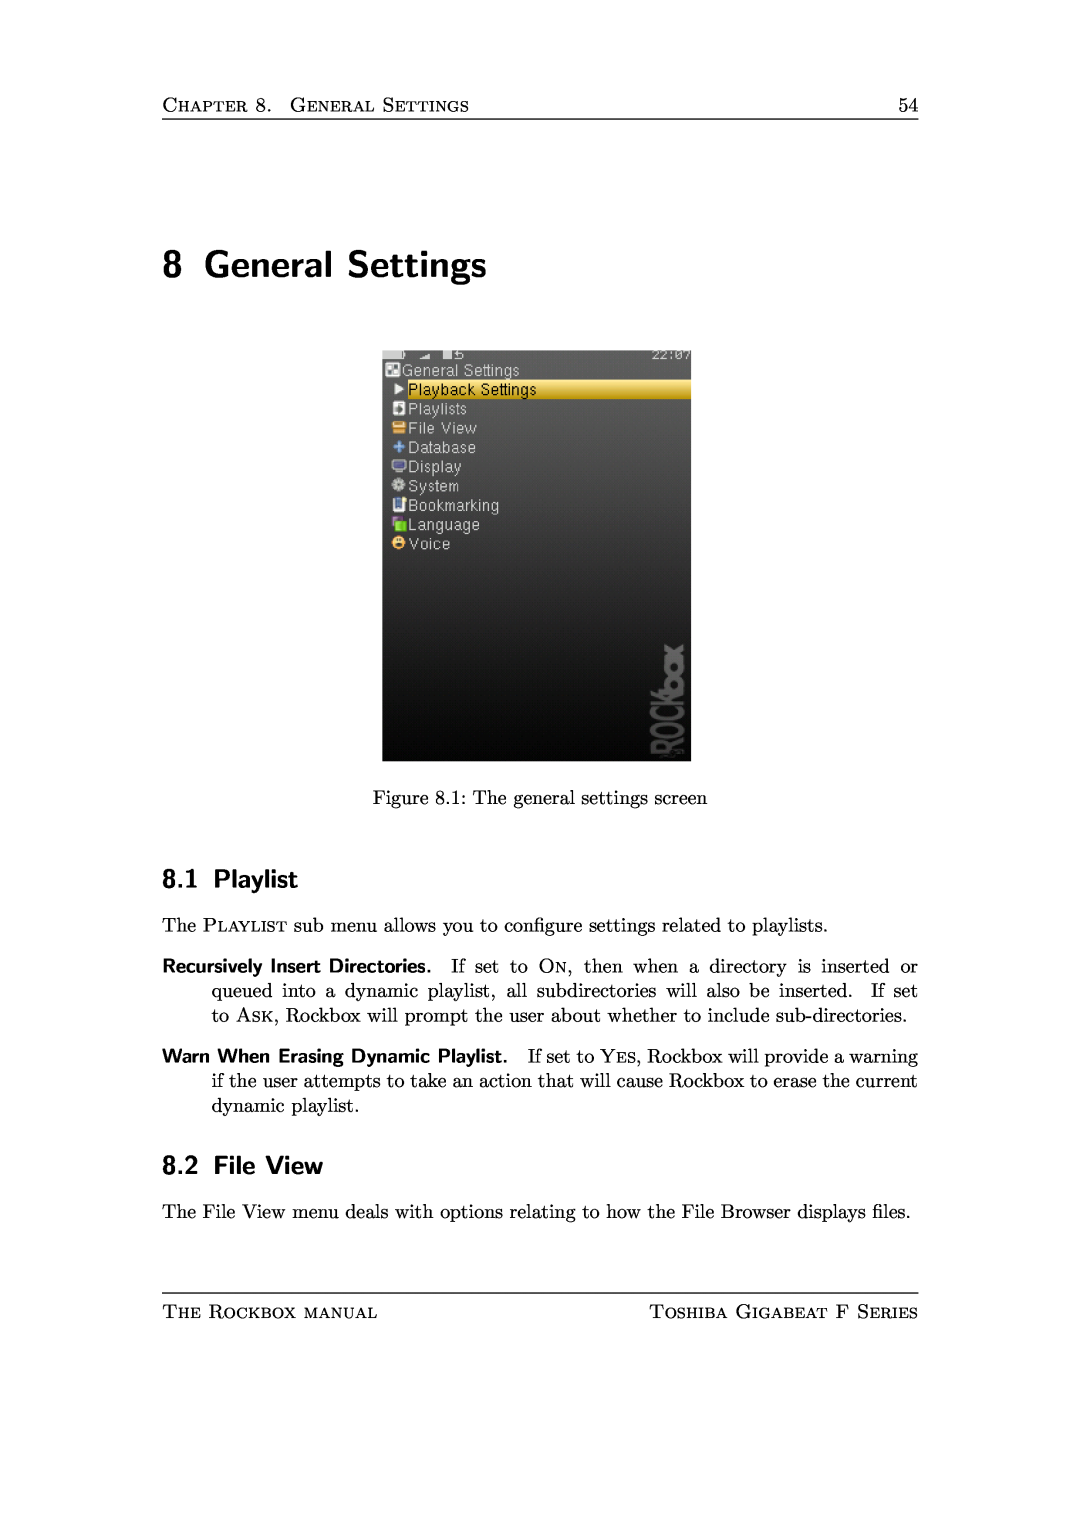 Toshiba F Series manual General Settings, Playlist, File View 